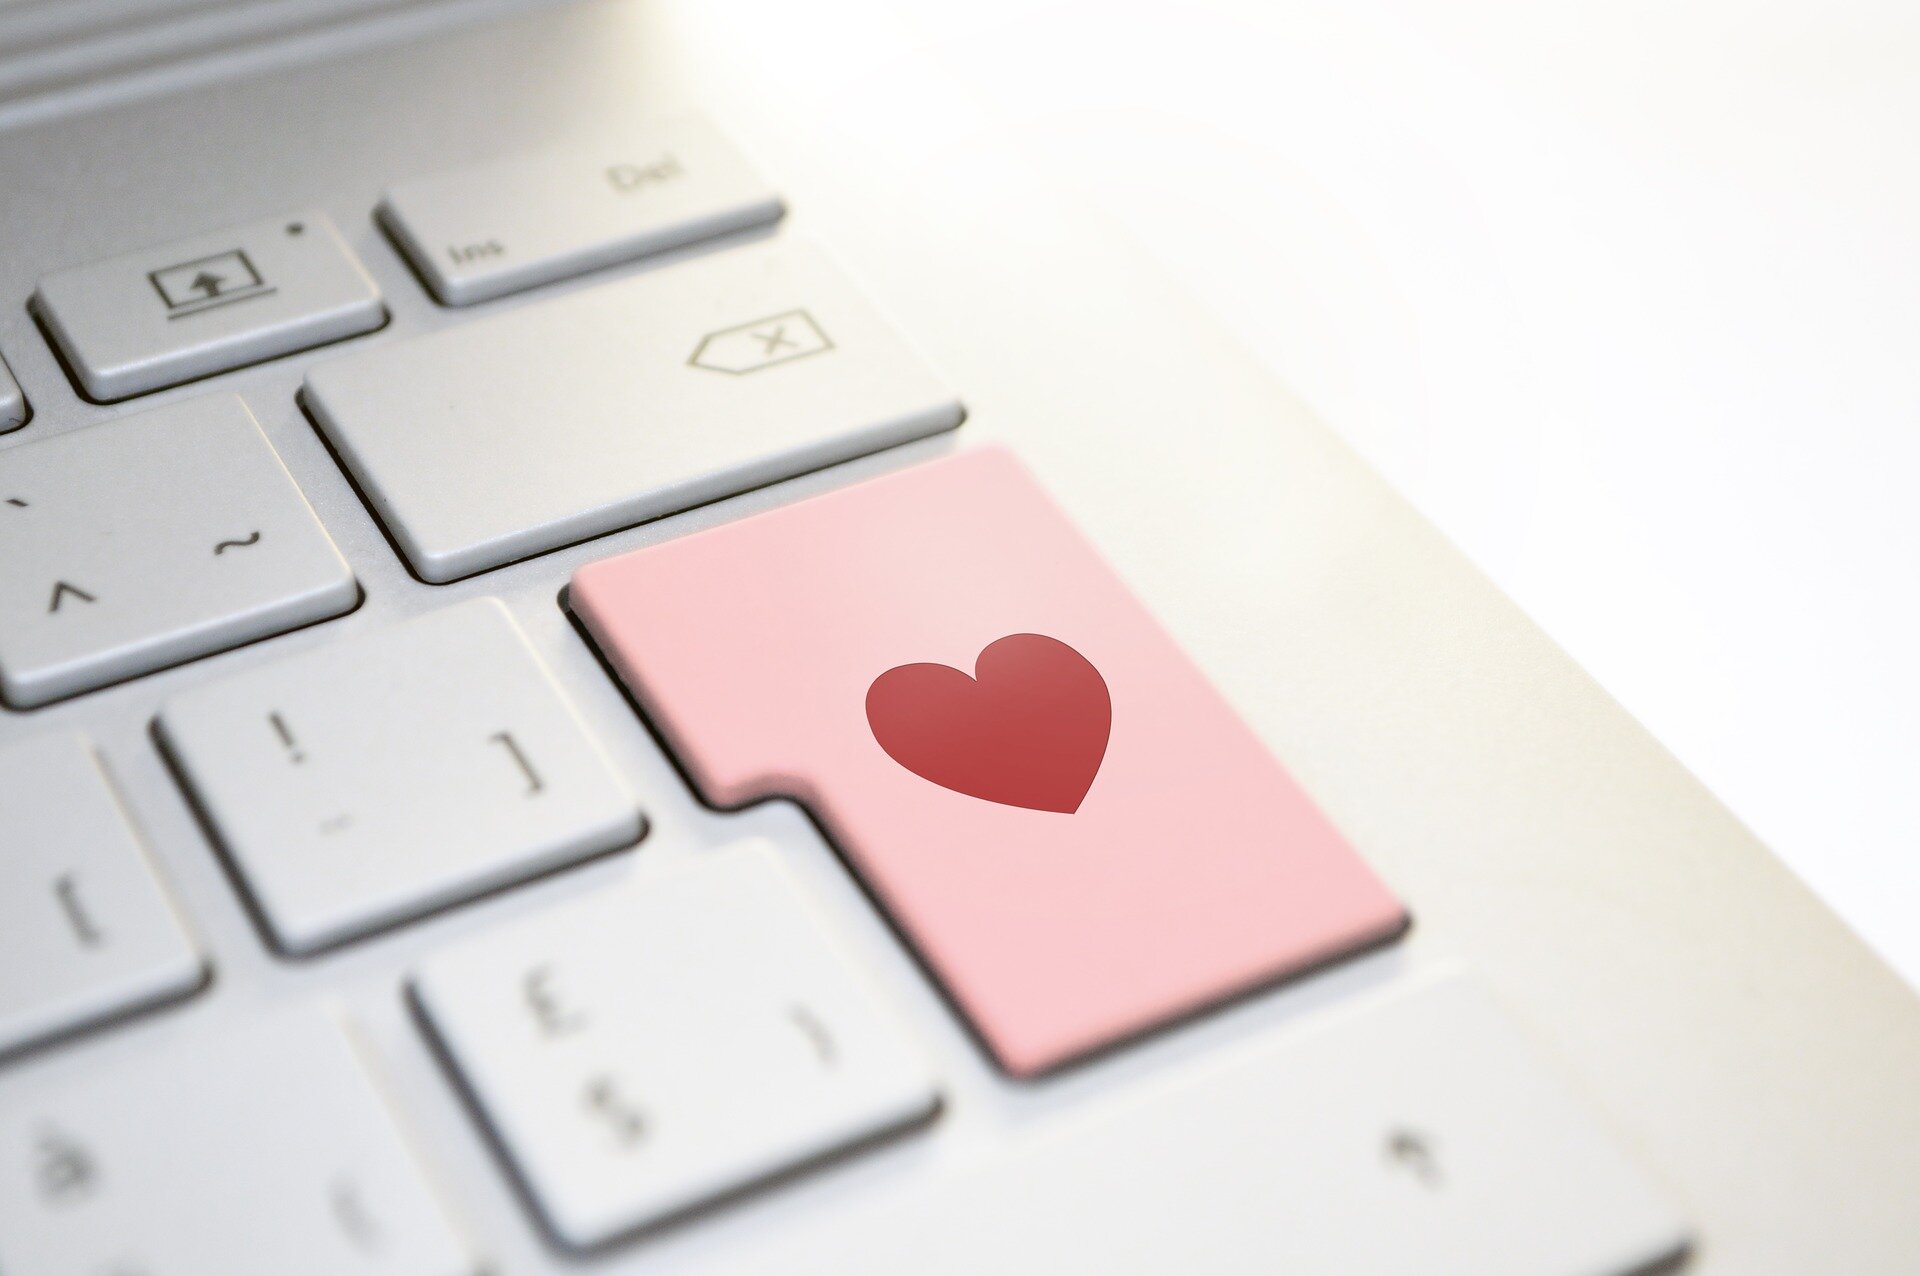 How popular is online dating